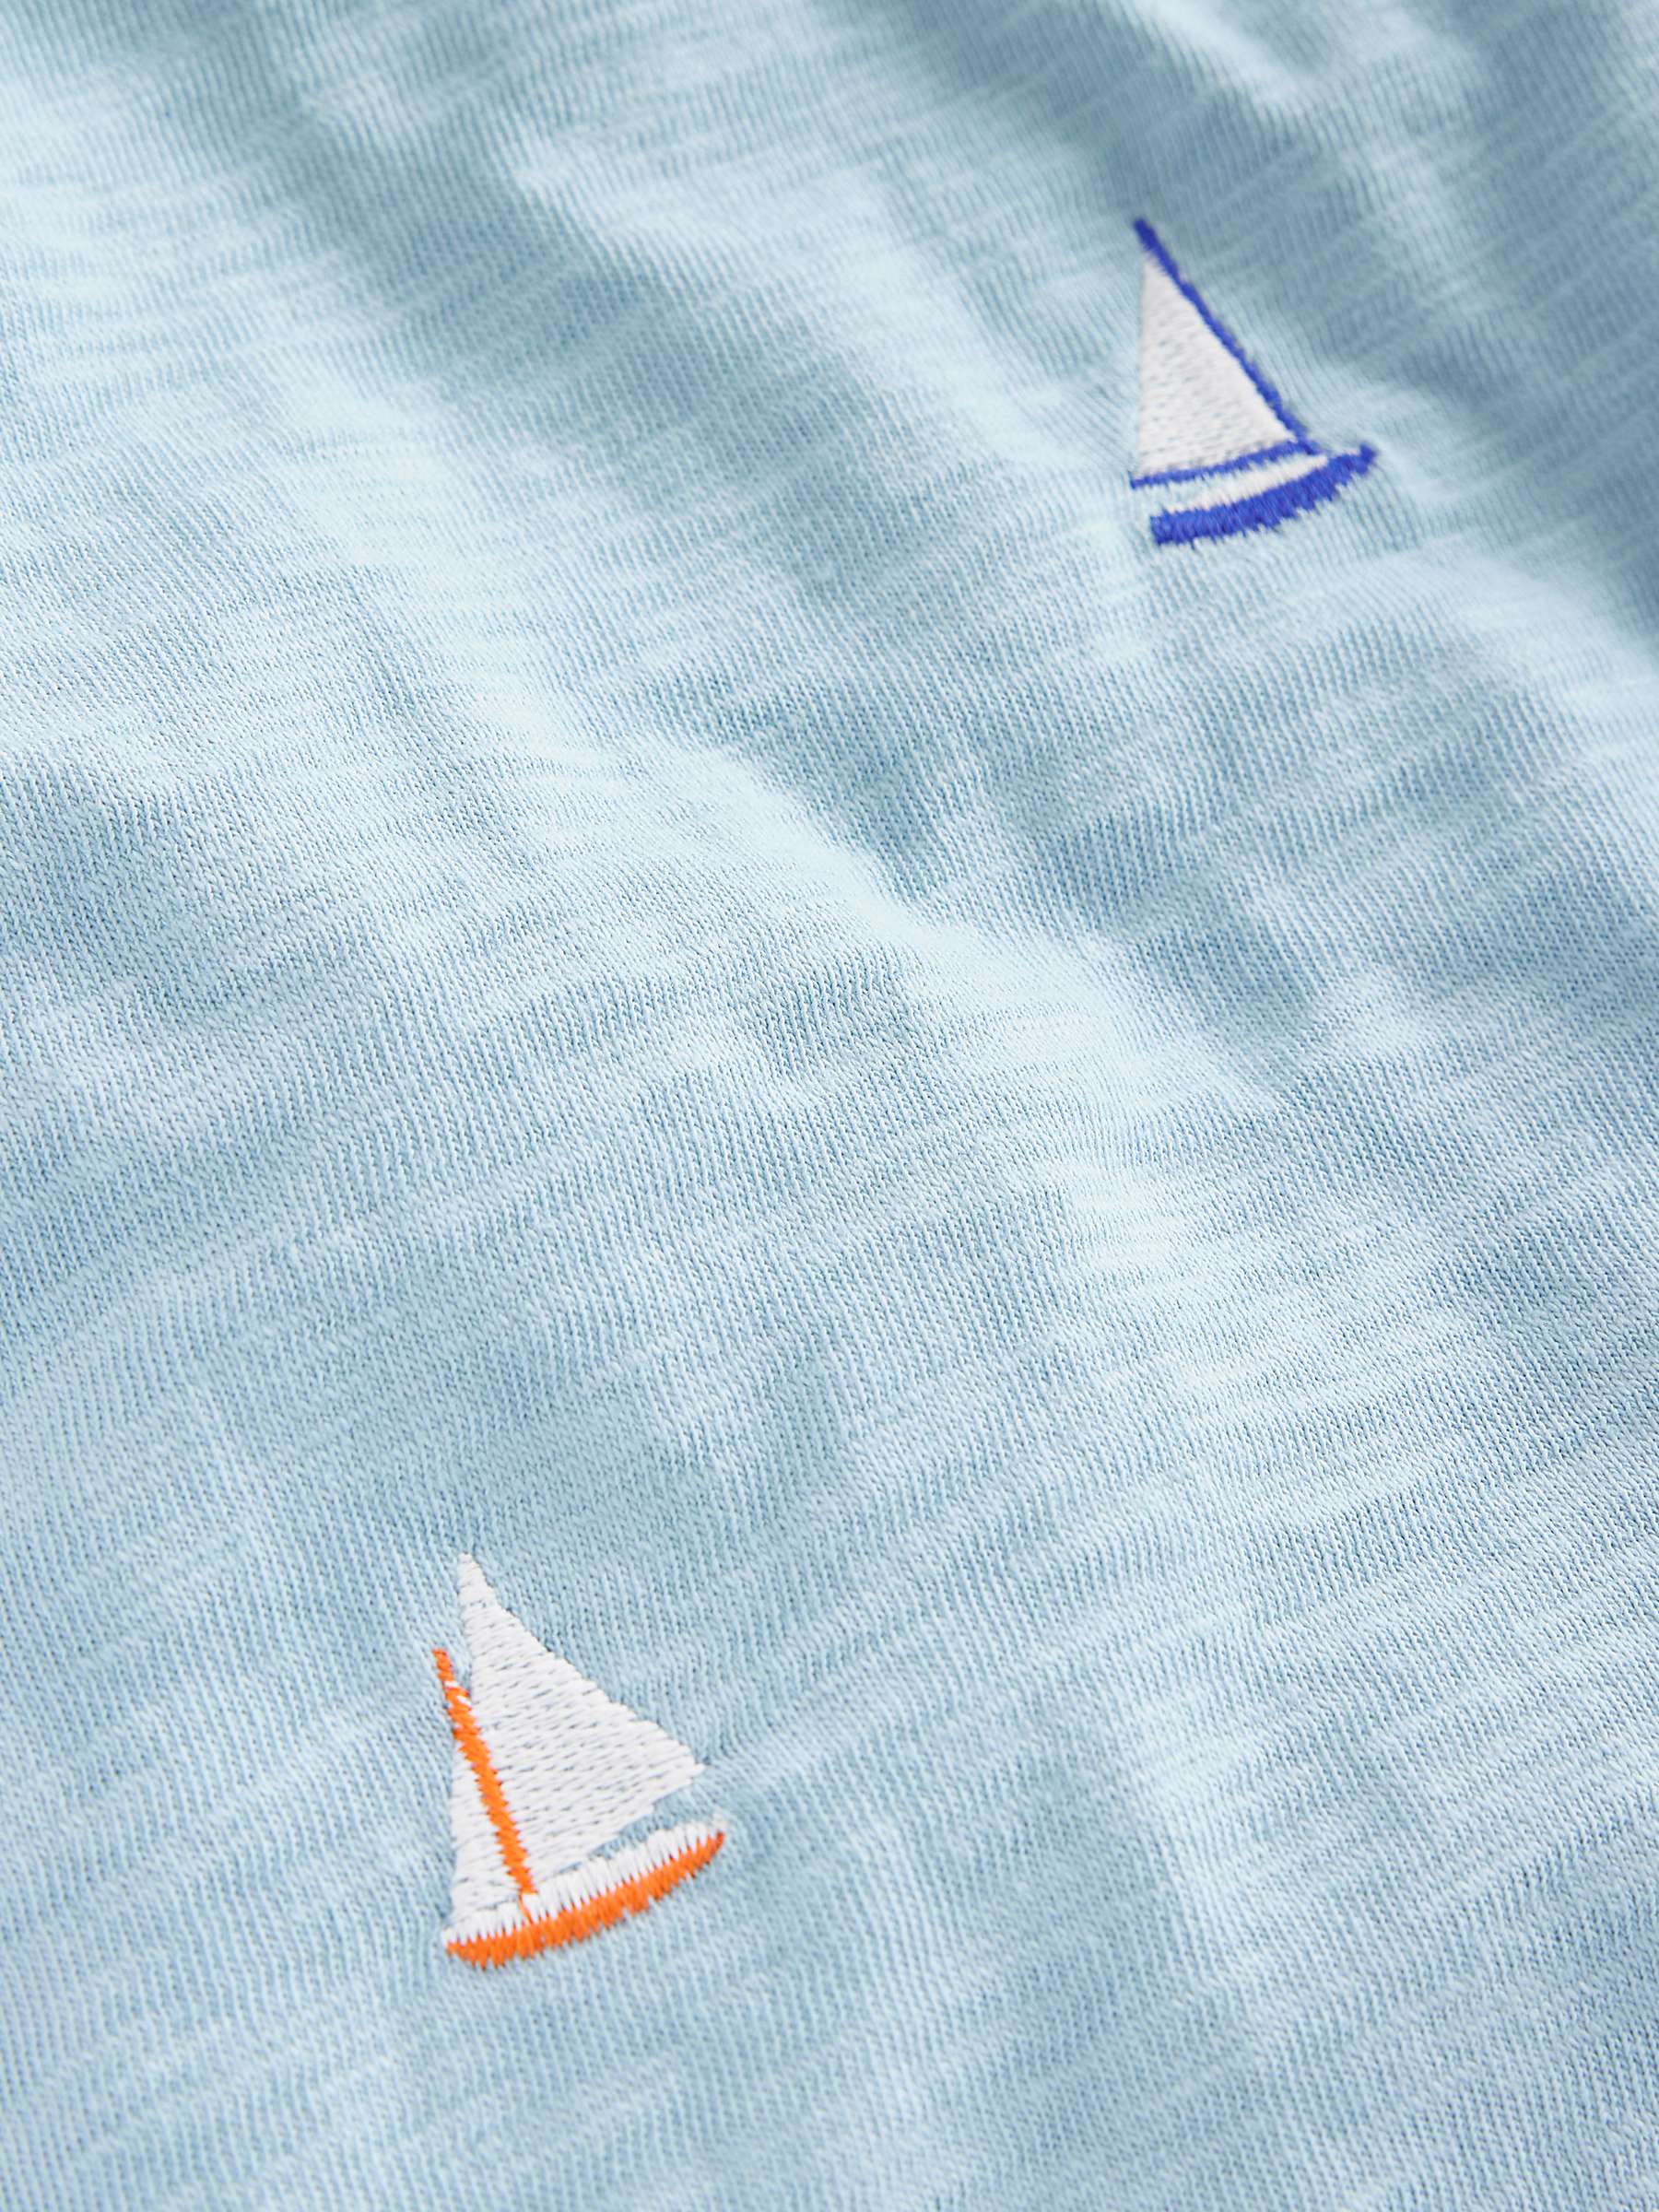 Buy Mini Boden Kids' Sail Boat Embroidered Slub Polo Shirt, Blue/Multi Online at johnlewis.com